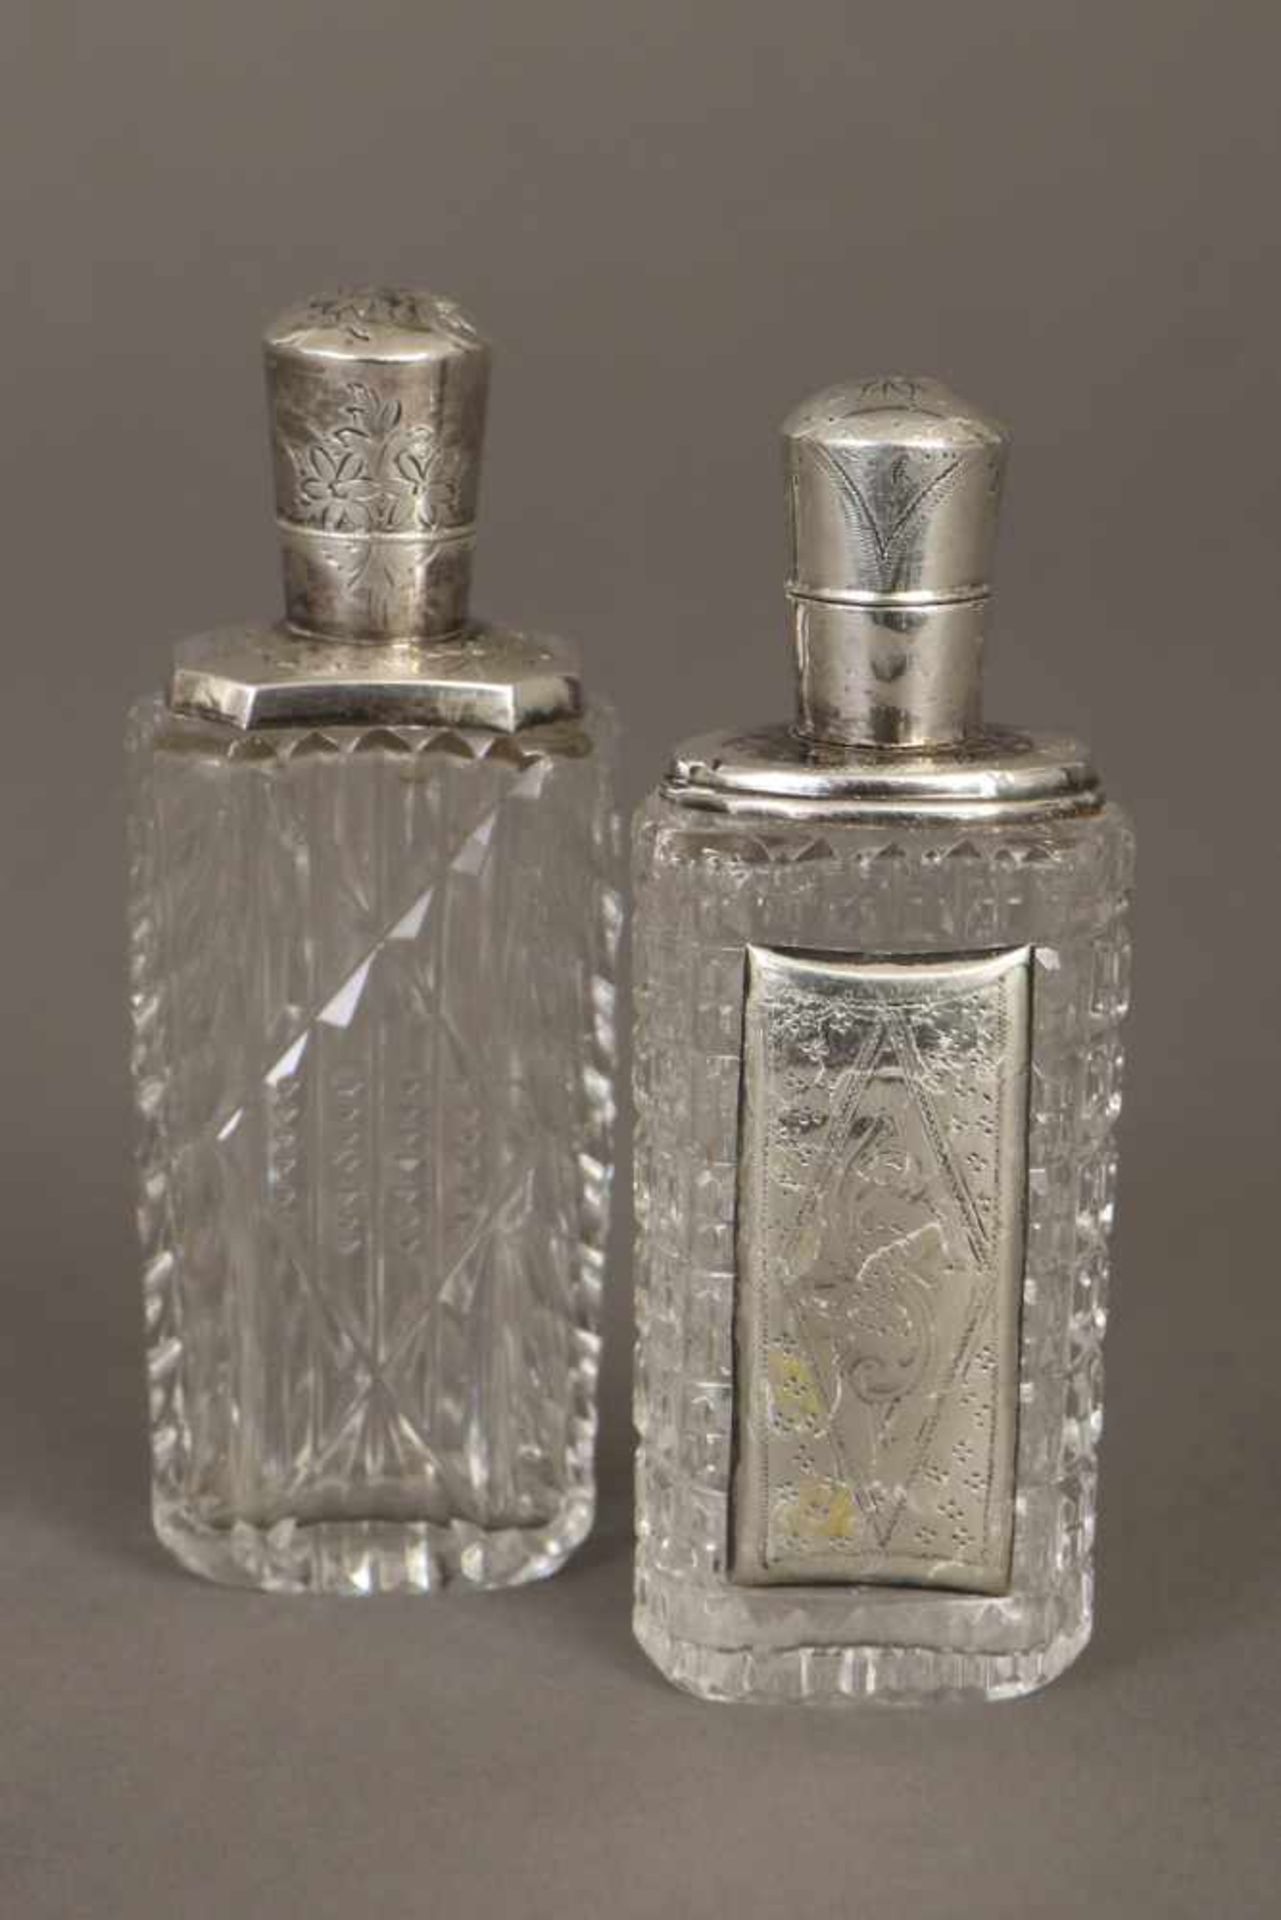 Konvolut Flakons (dazu 1 ¨pocket-flask¨)Kristall und Sterling Silber, England, um 1900-30, - Bild 2 aus 2